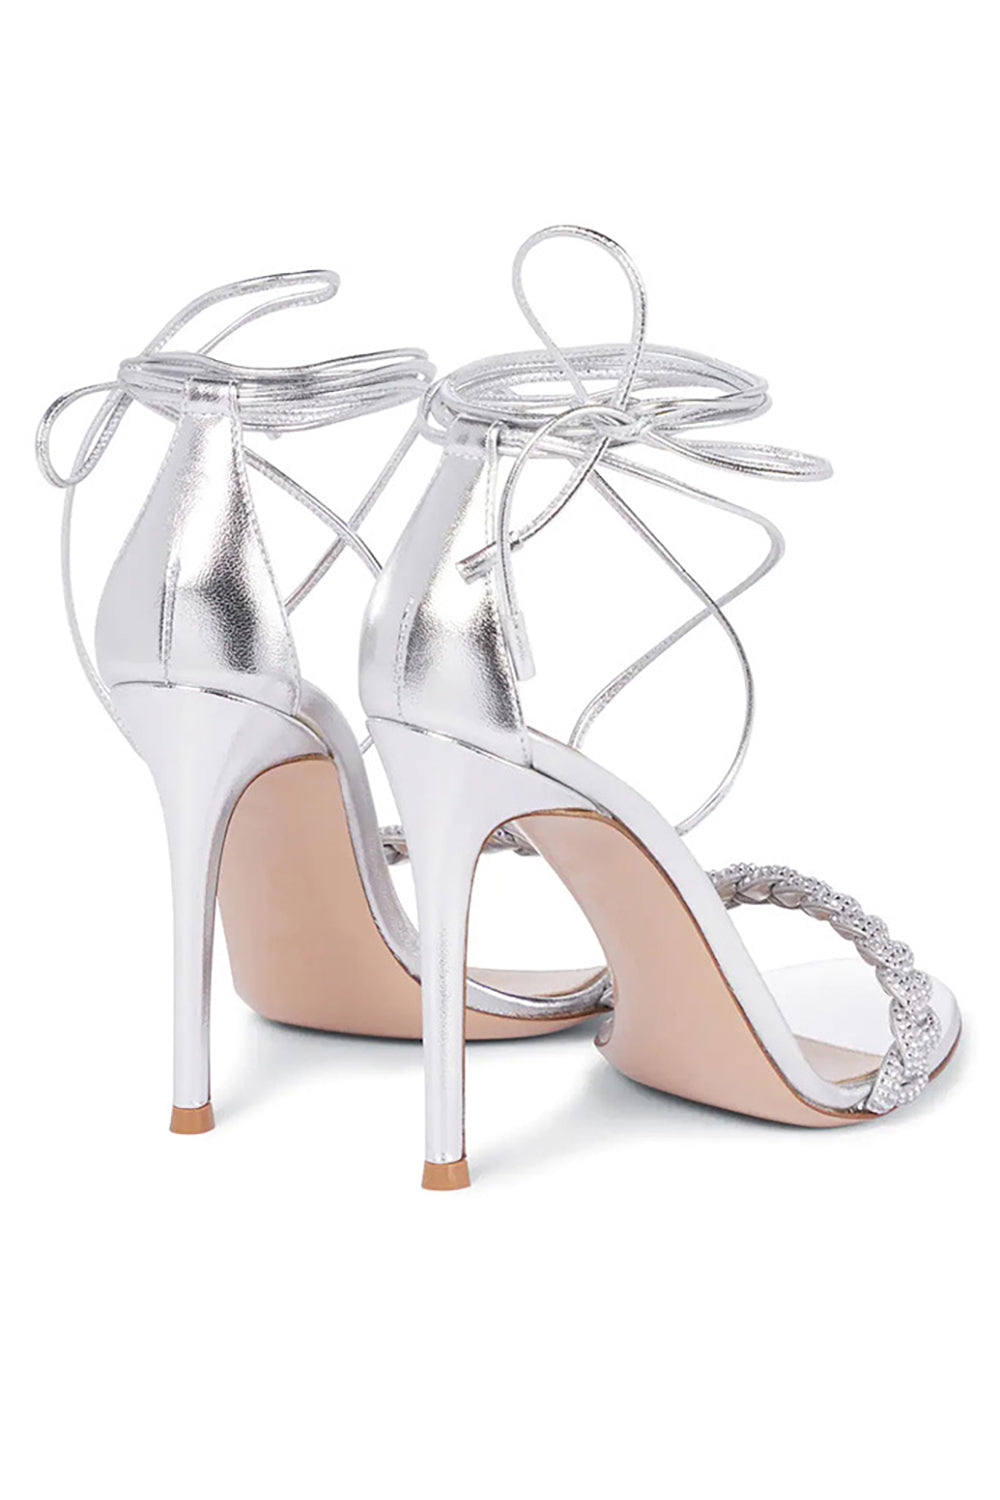 New Zara metallic block heels sandals size 8 Silver Shoes | eBay